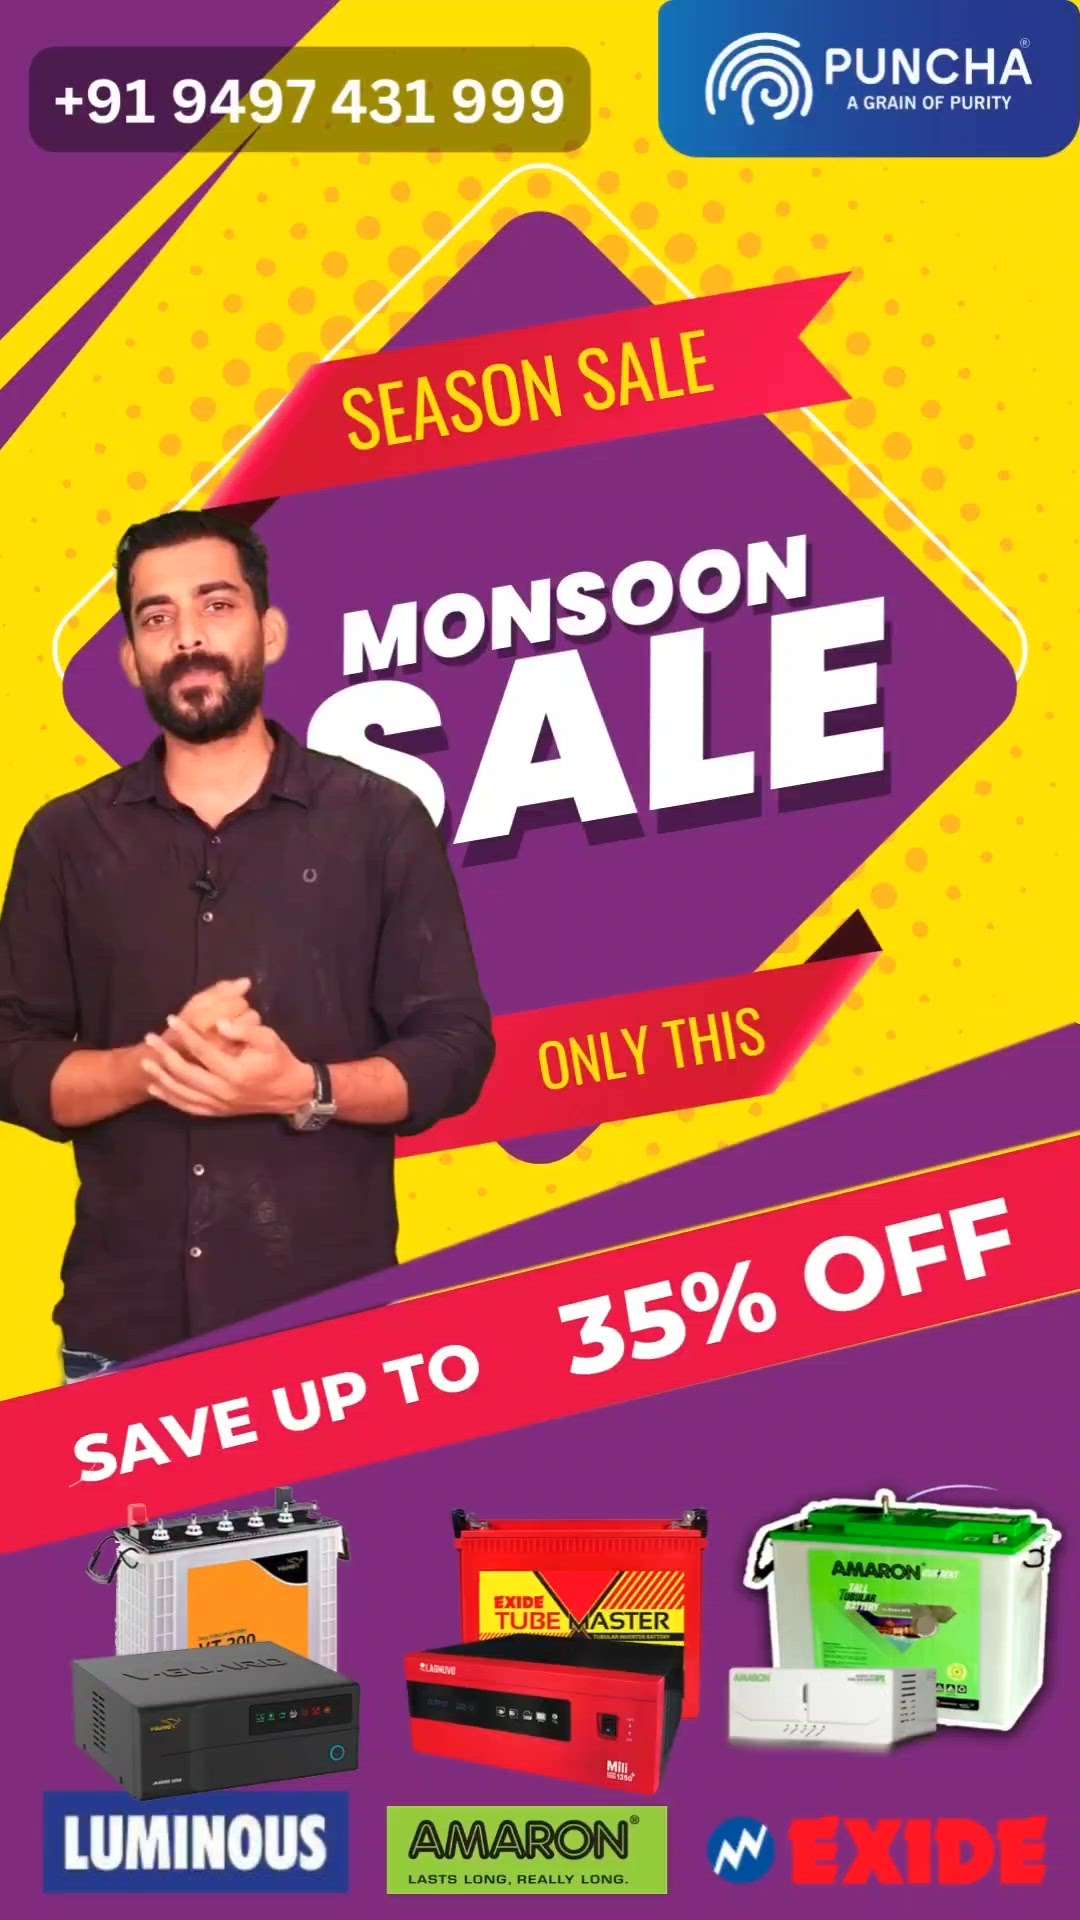 #monsoon #sale #inverter #battery
#punchain
mob=+919497431999